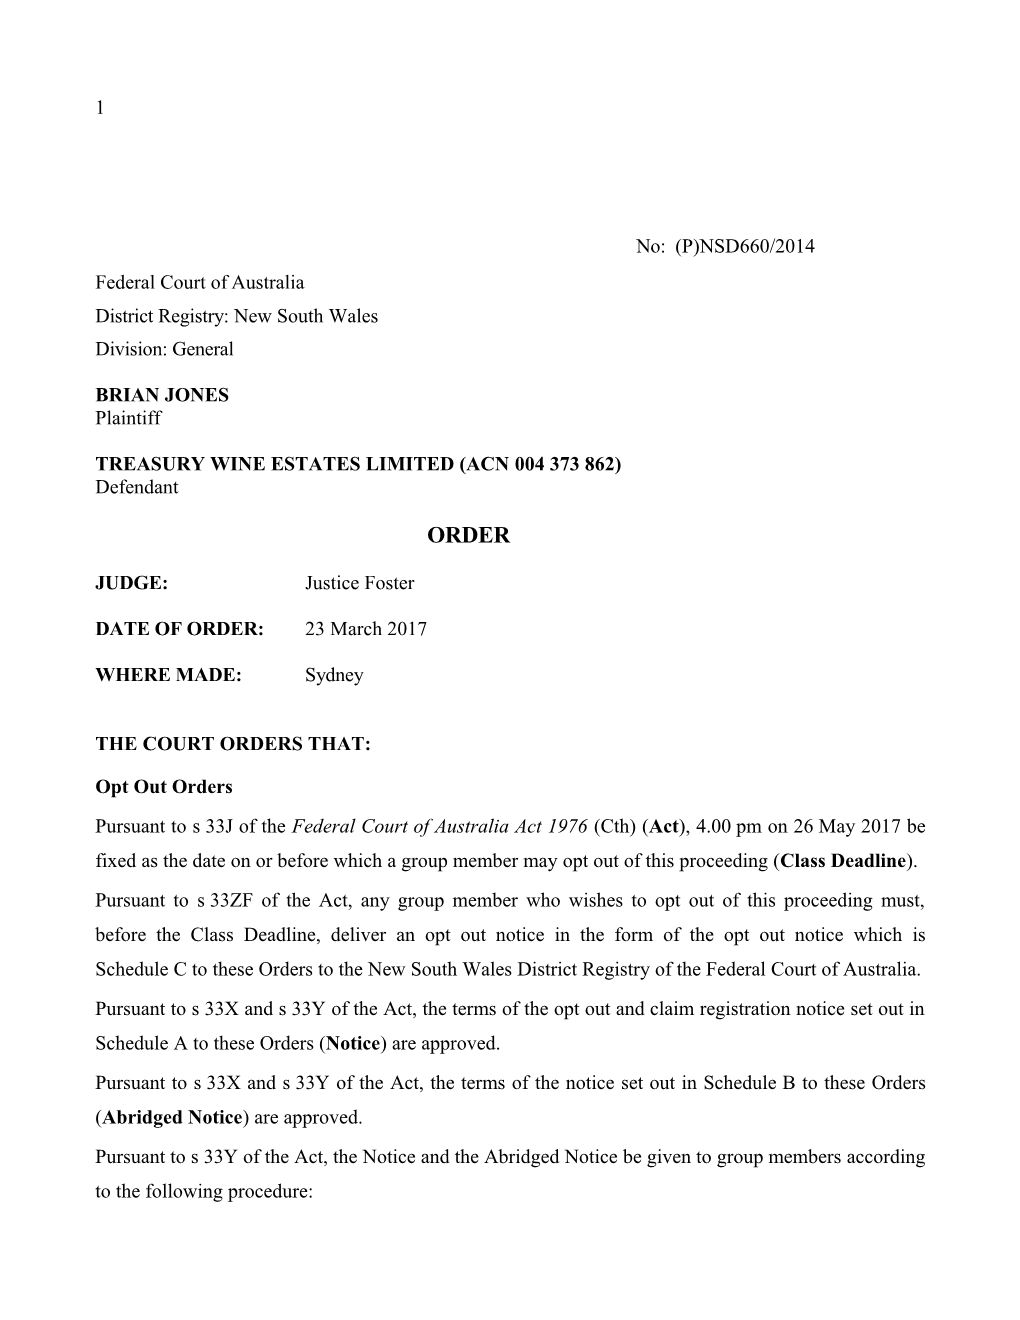 NSD 660 of 2014 - Brian Jones V Treasury Wine Estates Limited (ACN 004 373 862)